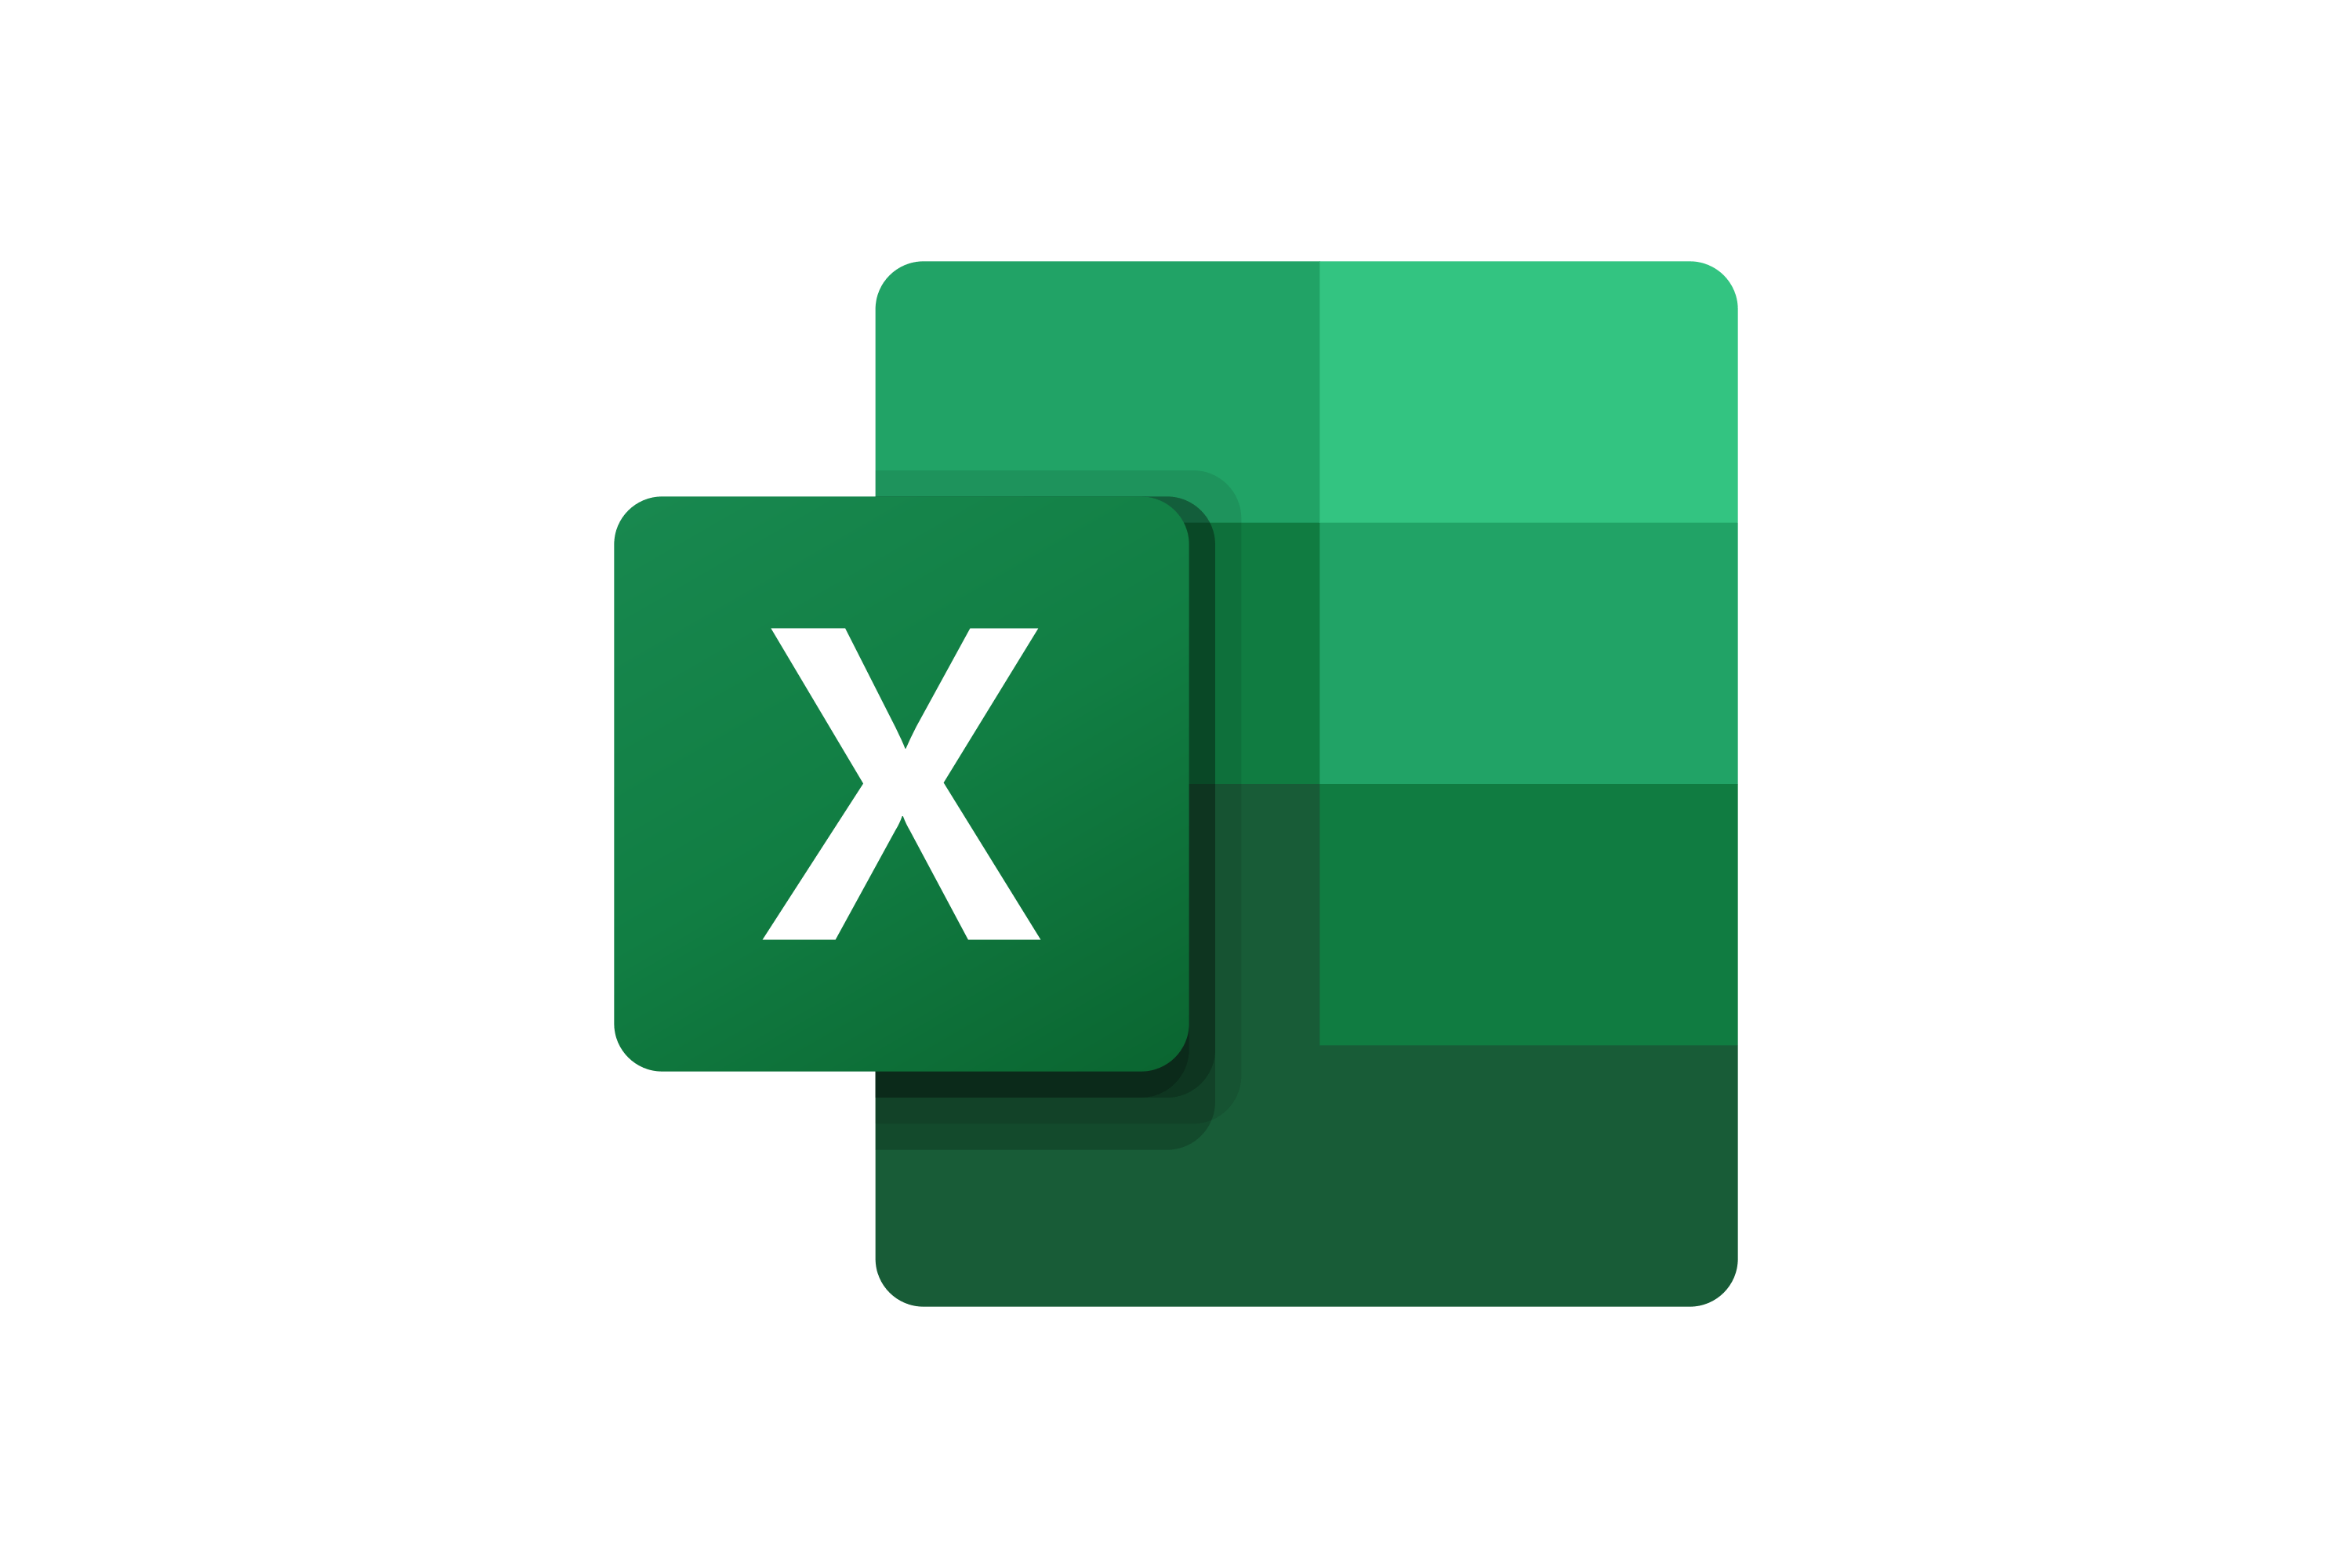 Microsoftexcel Logo 1 - Ms Ex